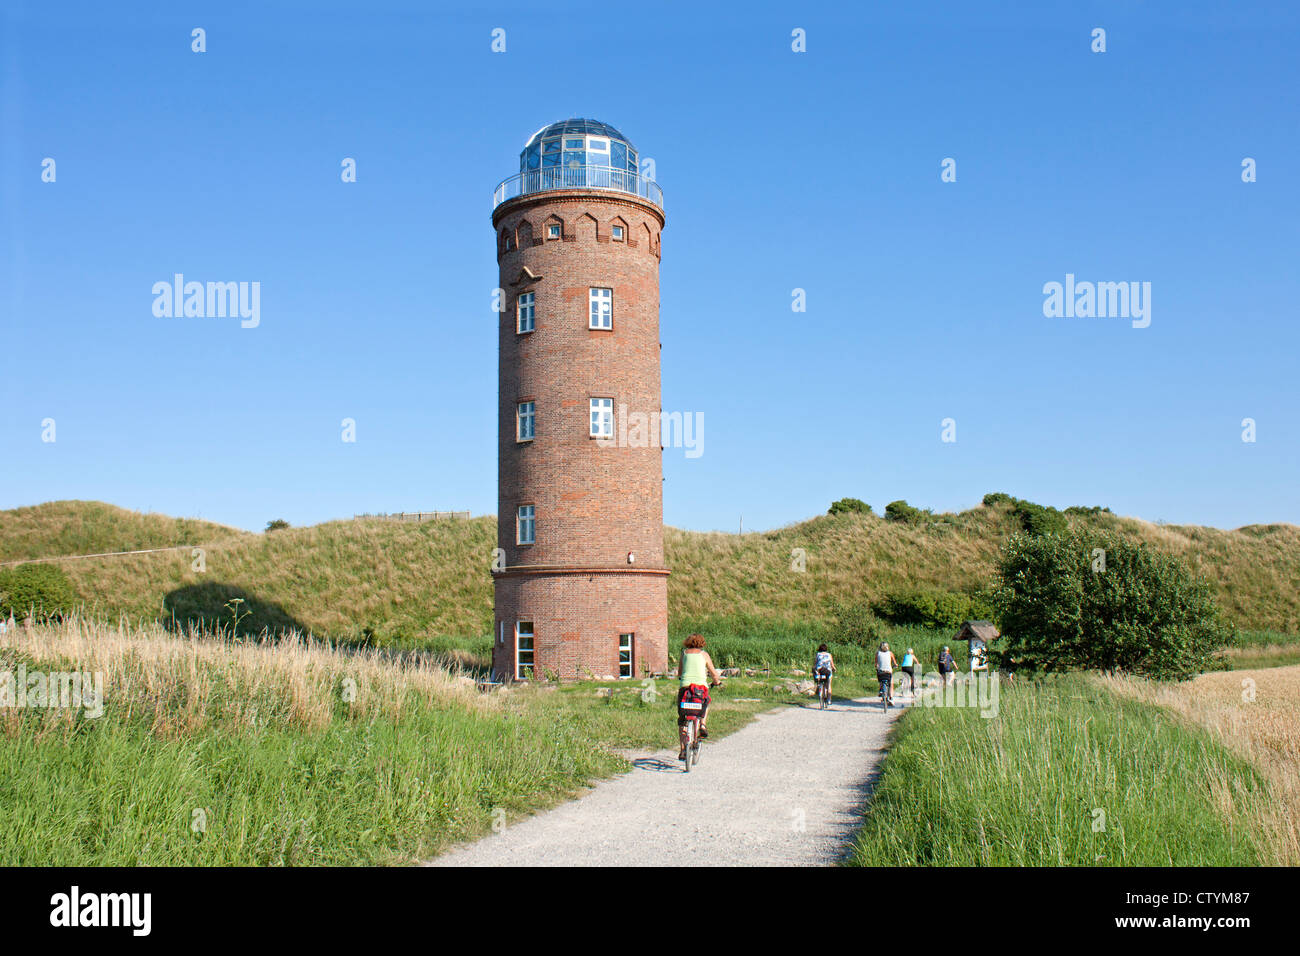 Marina torre di posizionamento, Kap Arkona, Ruegen isola, Mar Baltico, Meclemburgo-Pomerania Occidentale, Germania Foto Stock